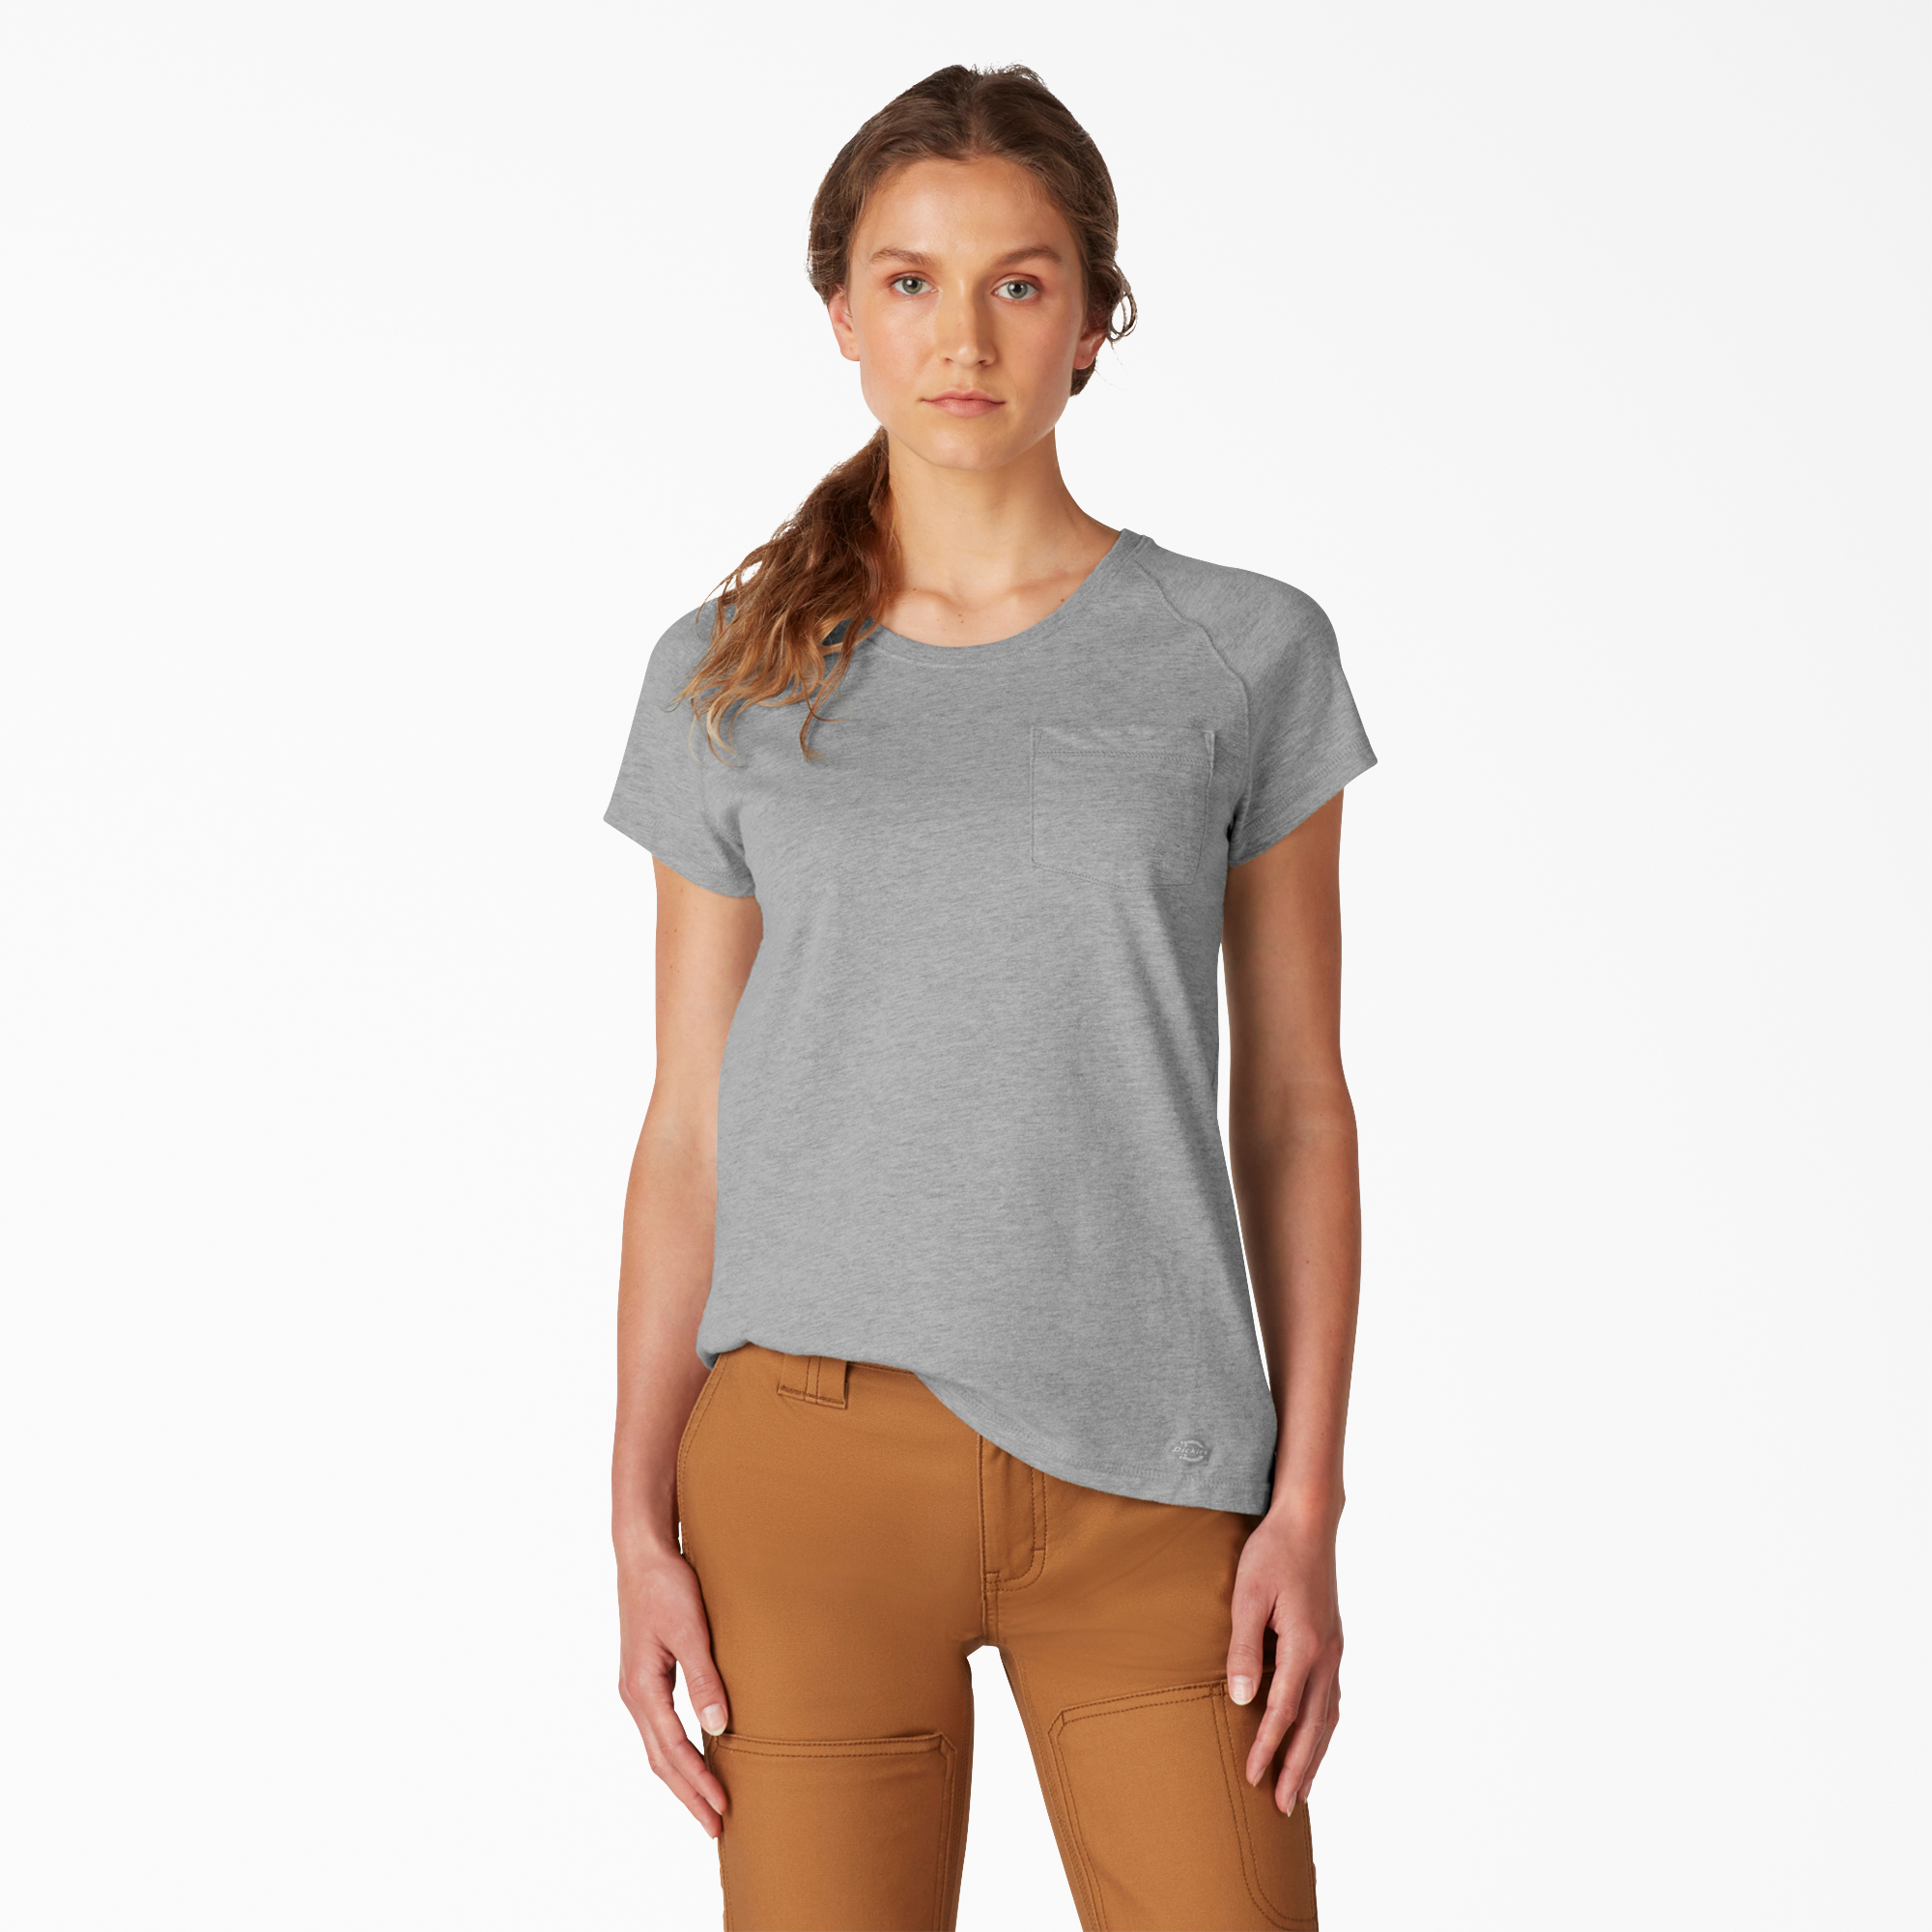 Women's Cooling Short Sleeve T-Shirt - Heather Gray (HG)